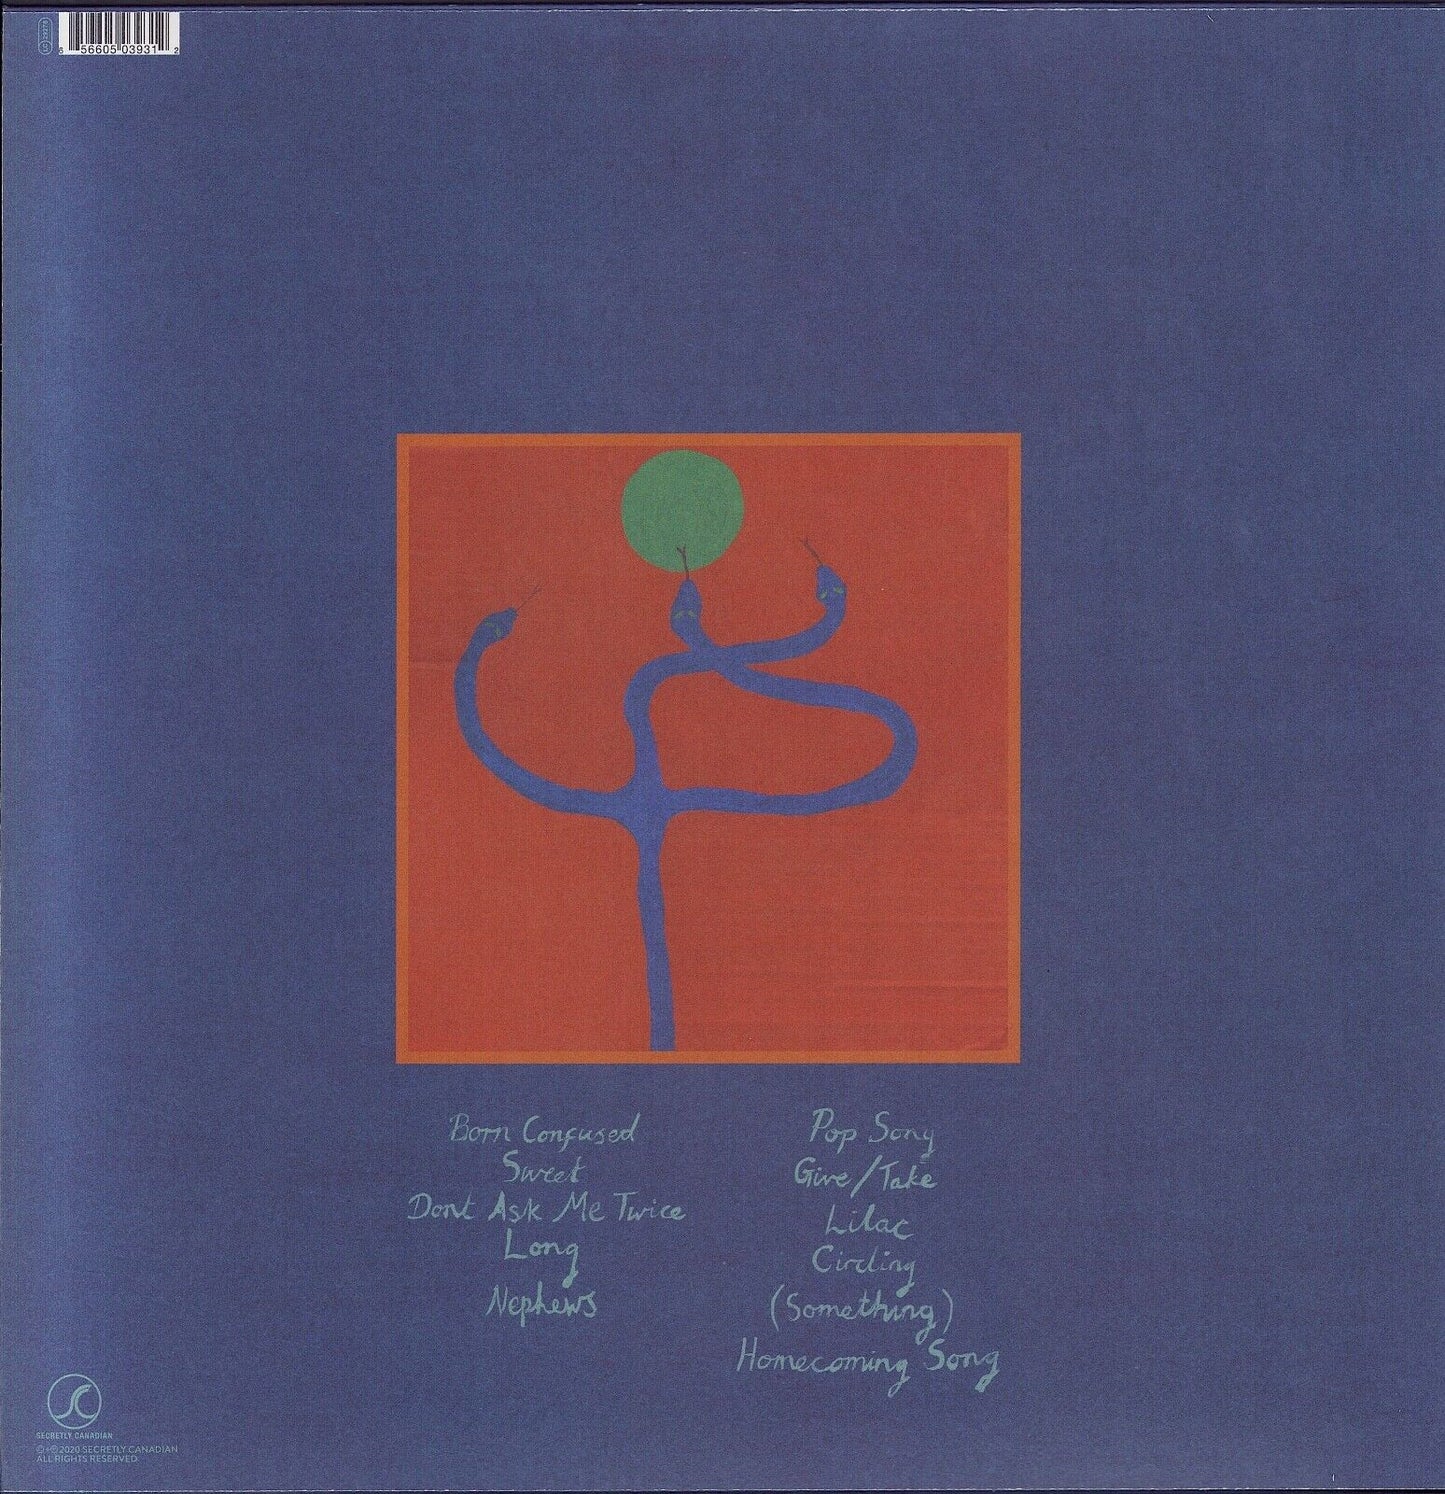 Porridge Radio - Every Bad Blue Vinyl LP Limited Edition